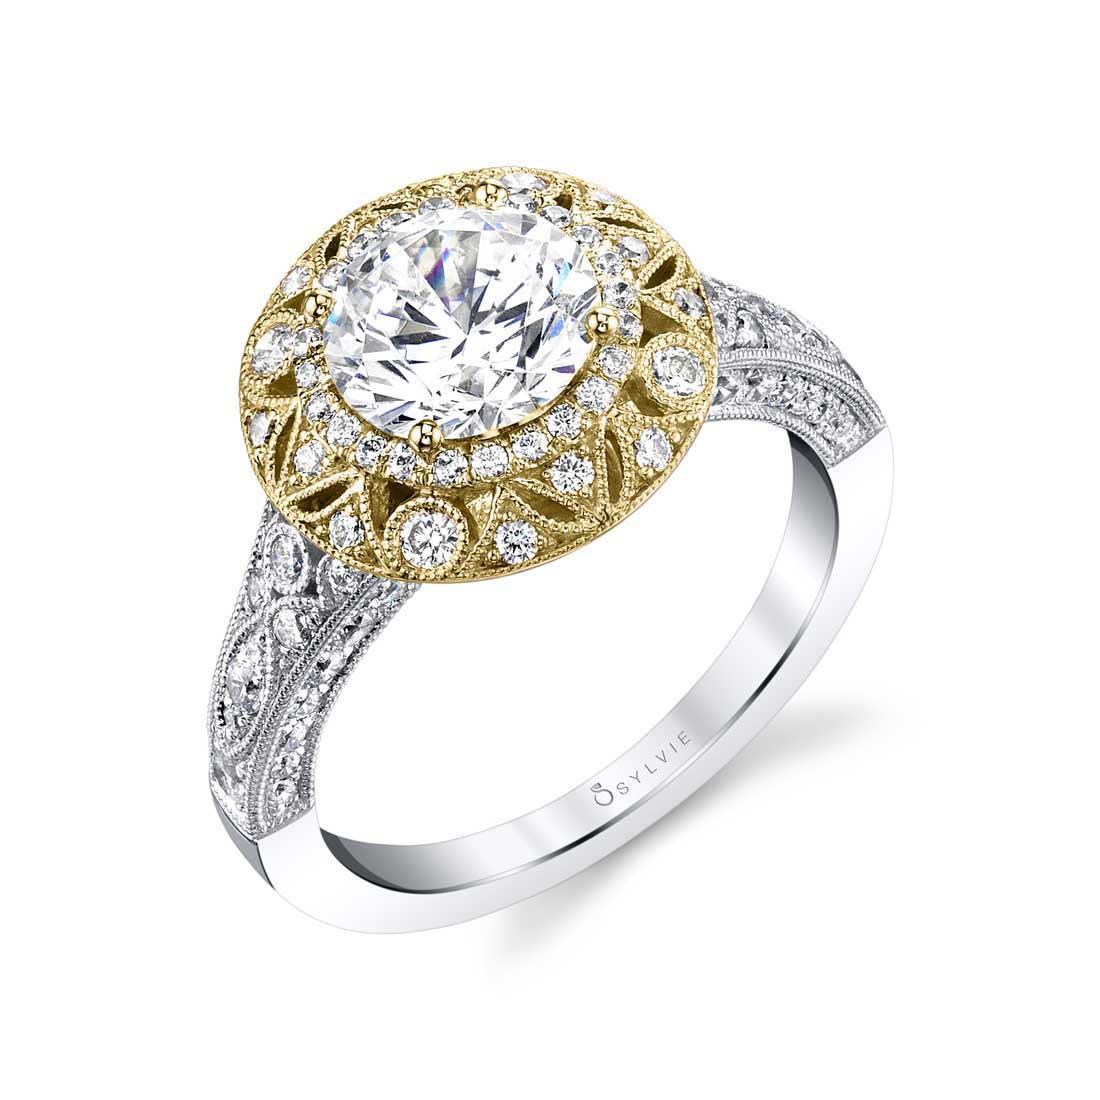 Vintage Inspired Engagement Ring